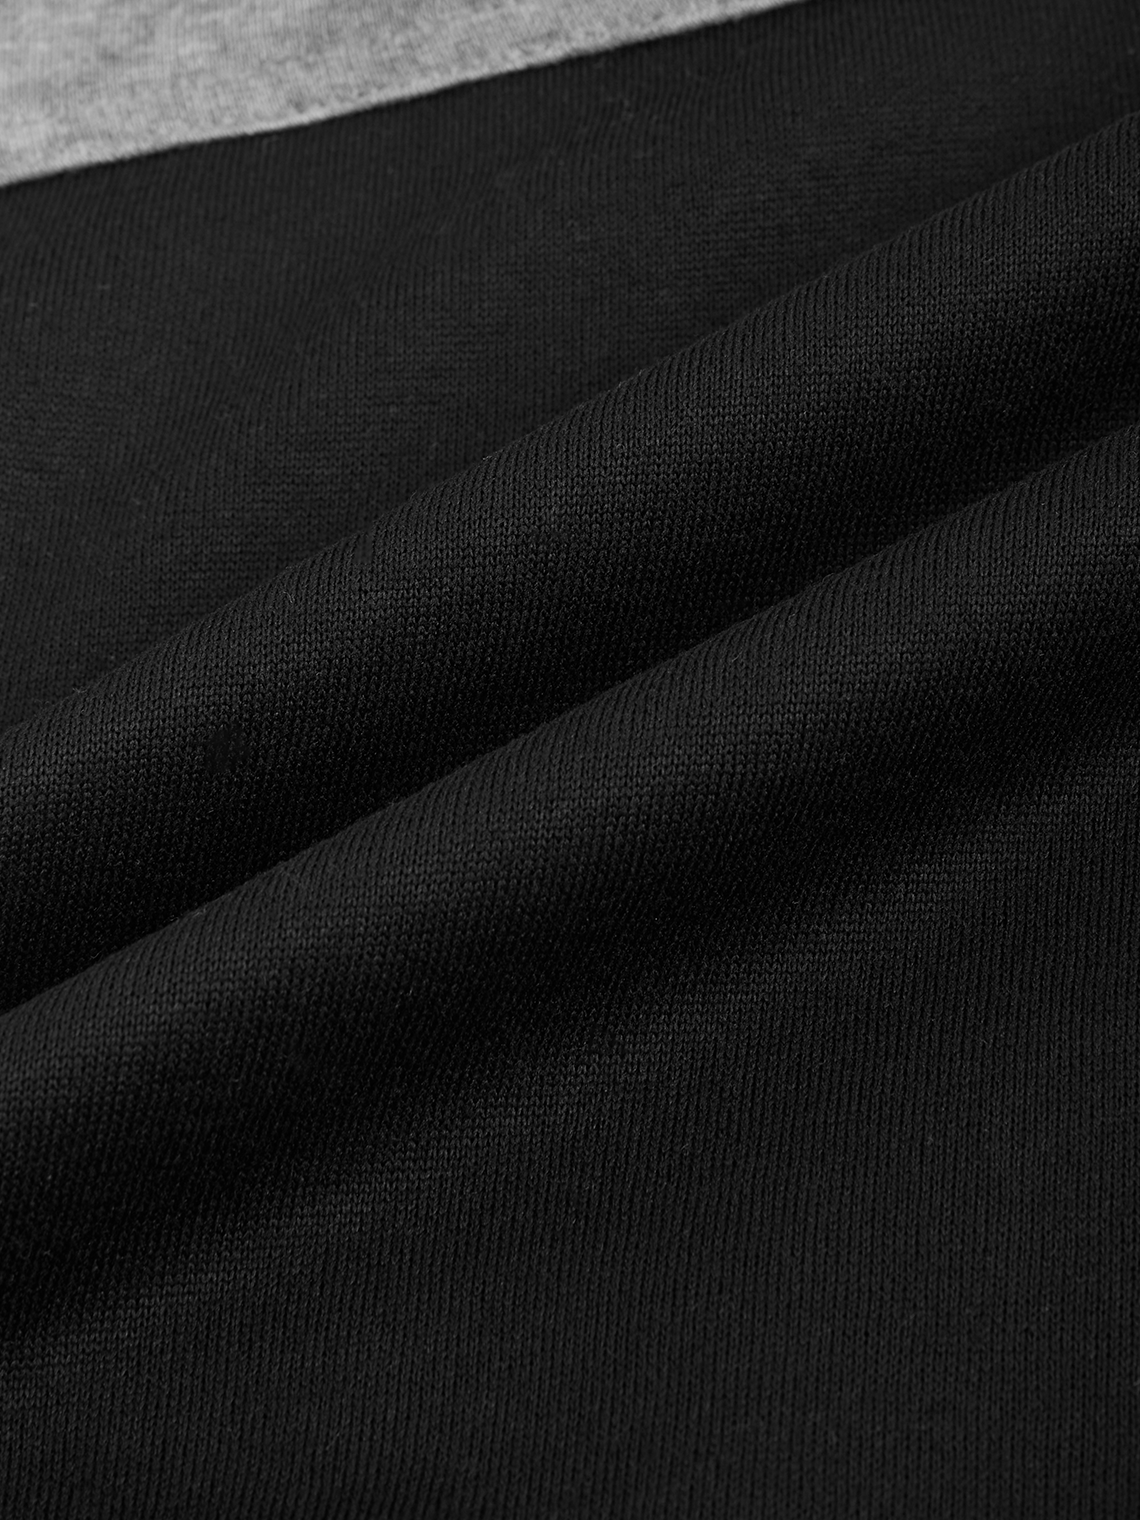 【Final Sale】Crew Neck Contrast Stitching Long Sleeve Sweatshirt